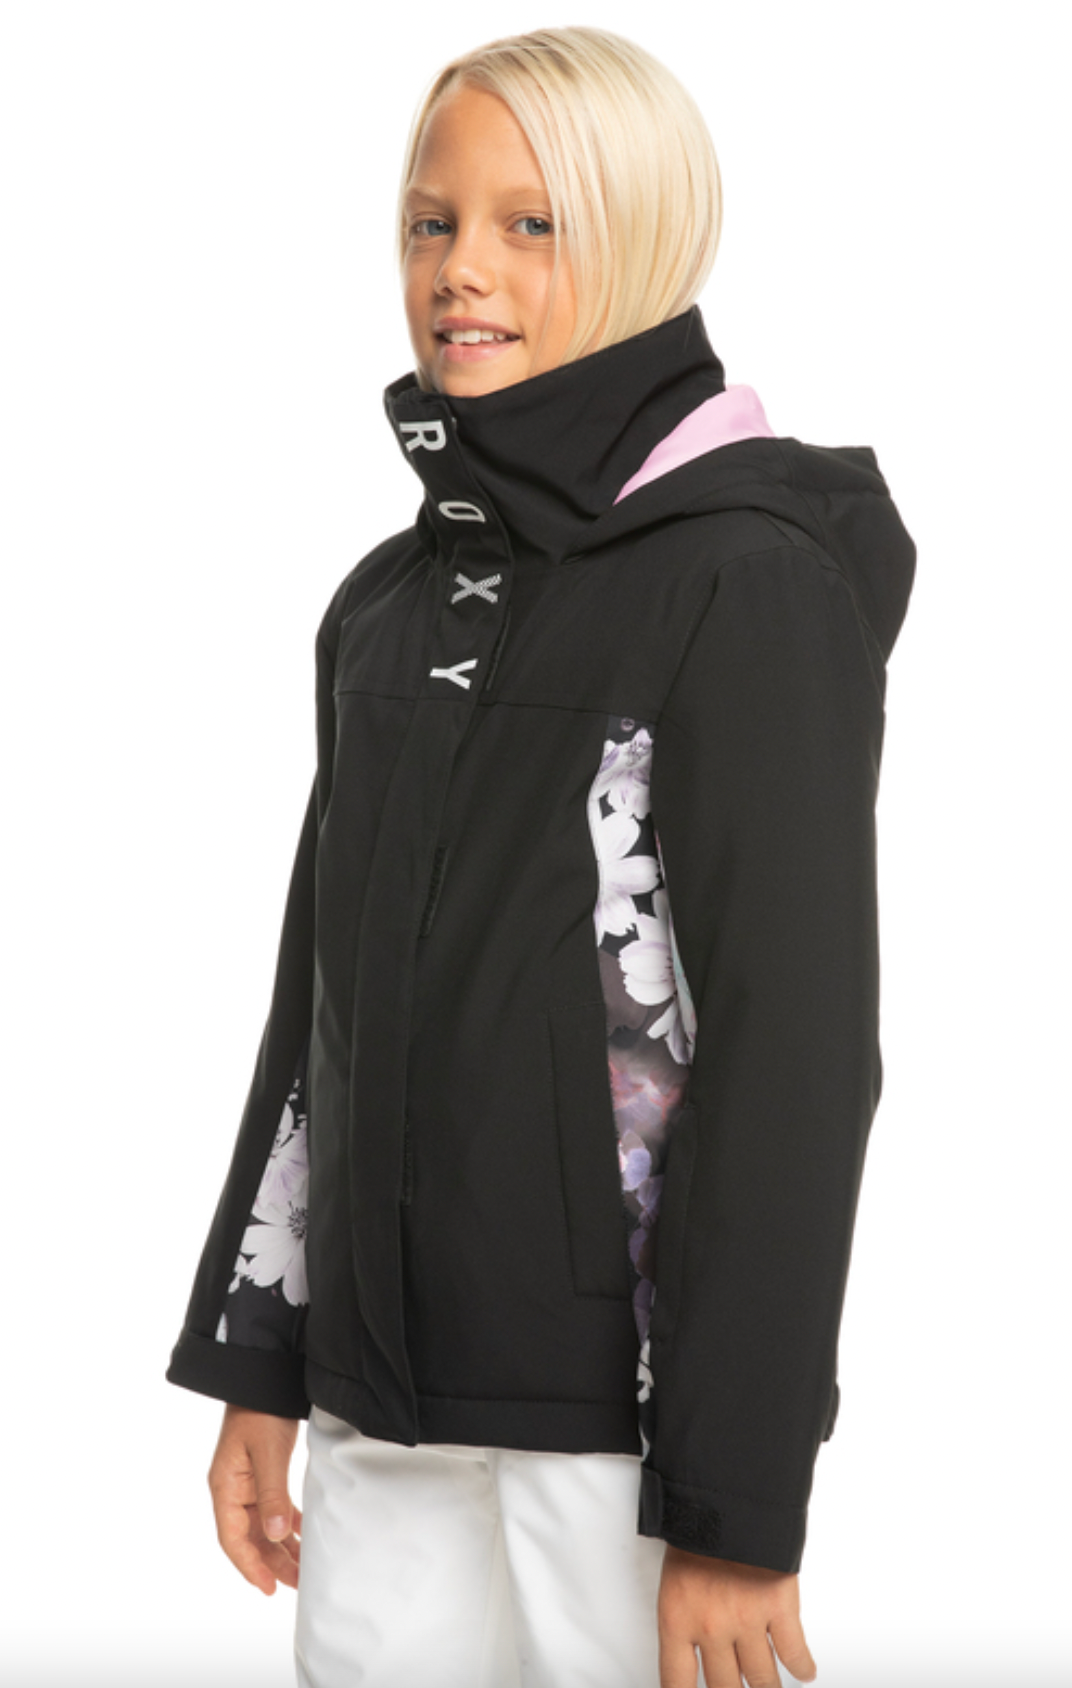 ROXY Galaxy - Technical Snow Jacket for Girls 8-16==SALE ==